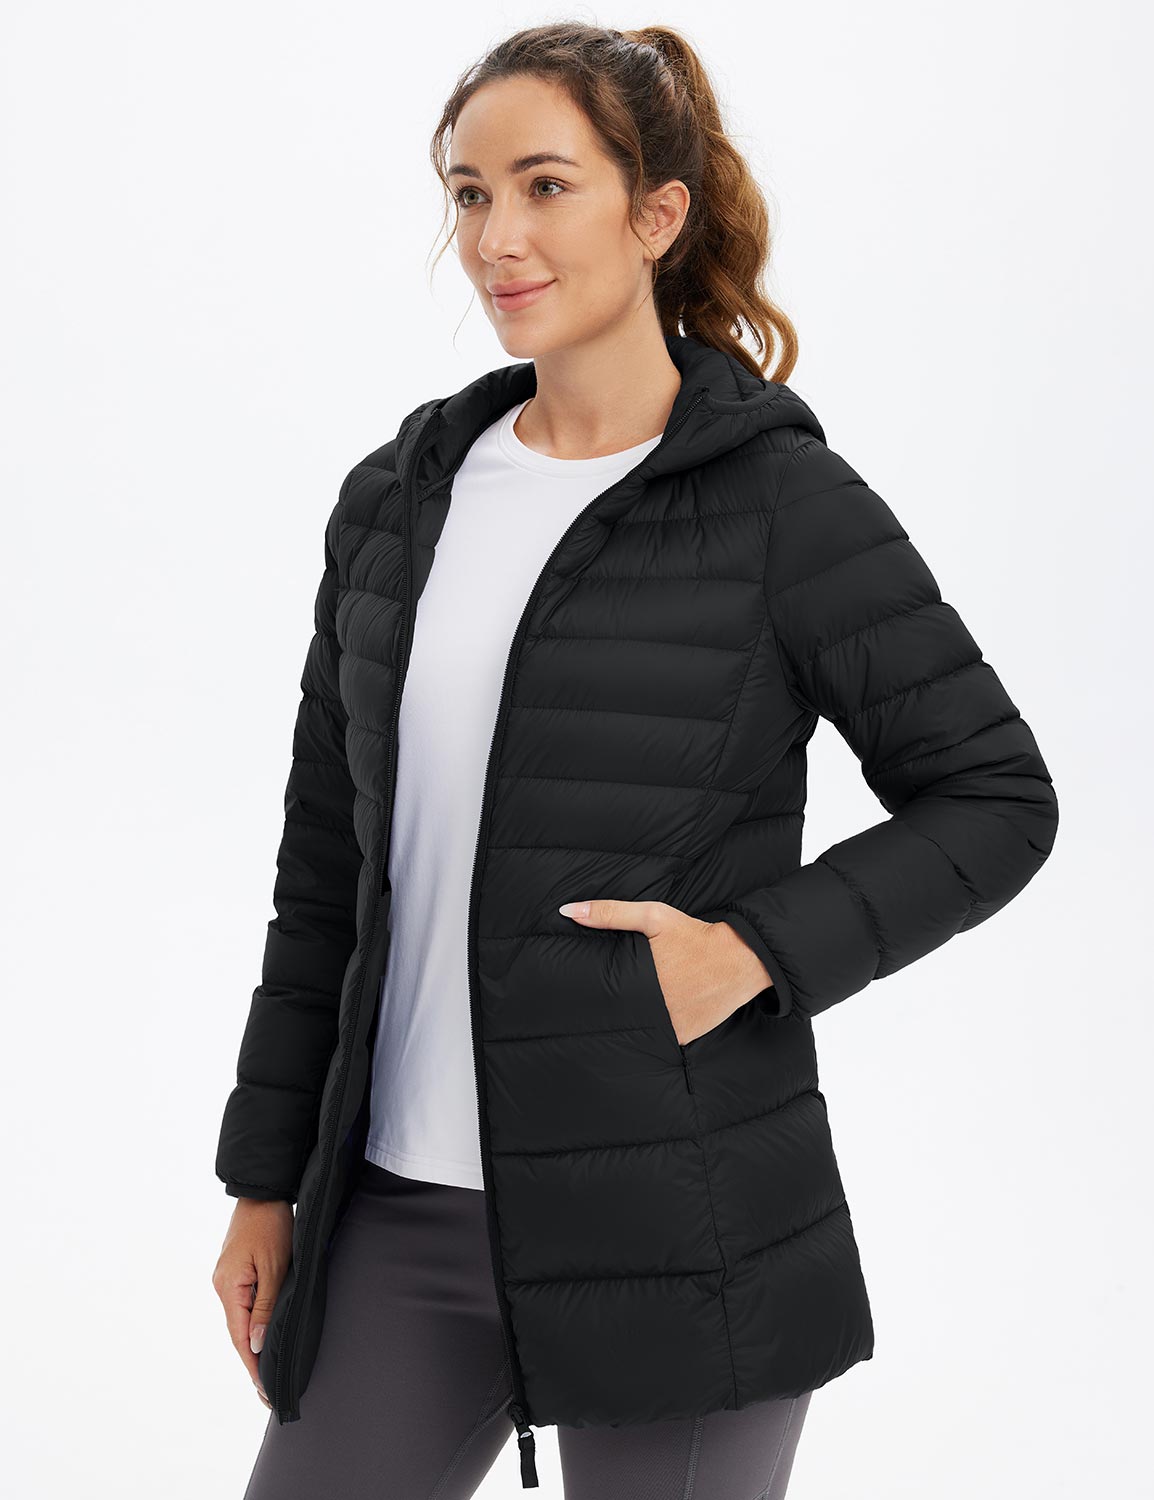 Baleaf Women's Water-Resistant Hooded Puffer Jacket dga065 Anthracite Details